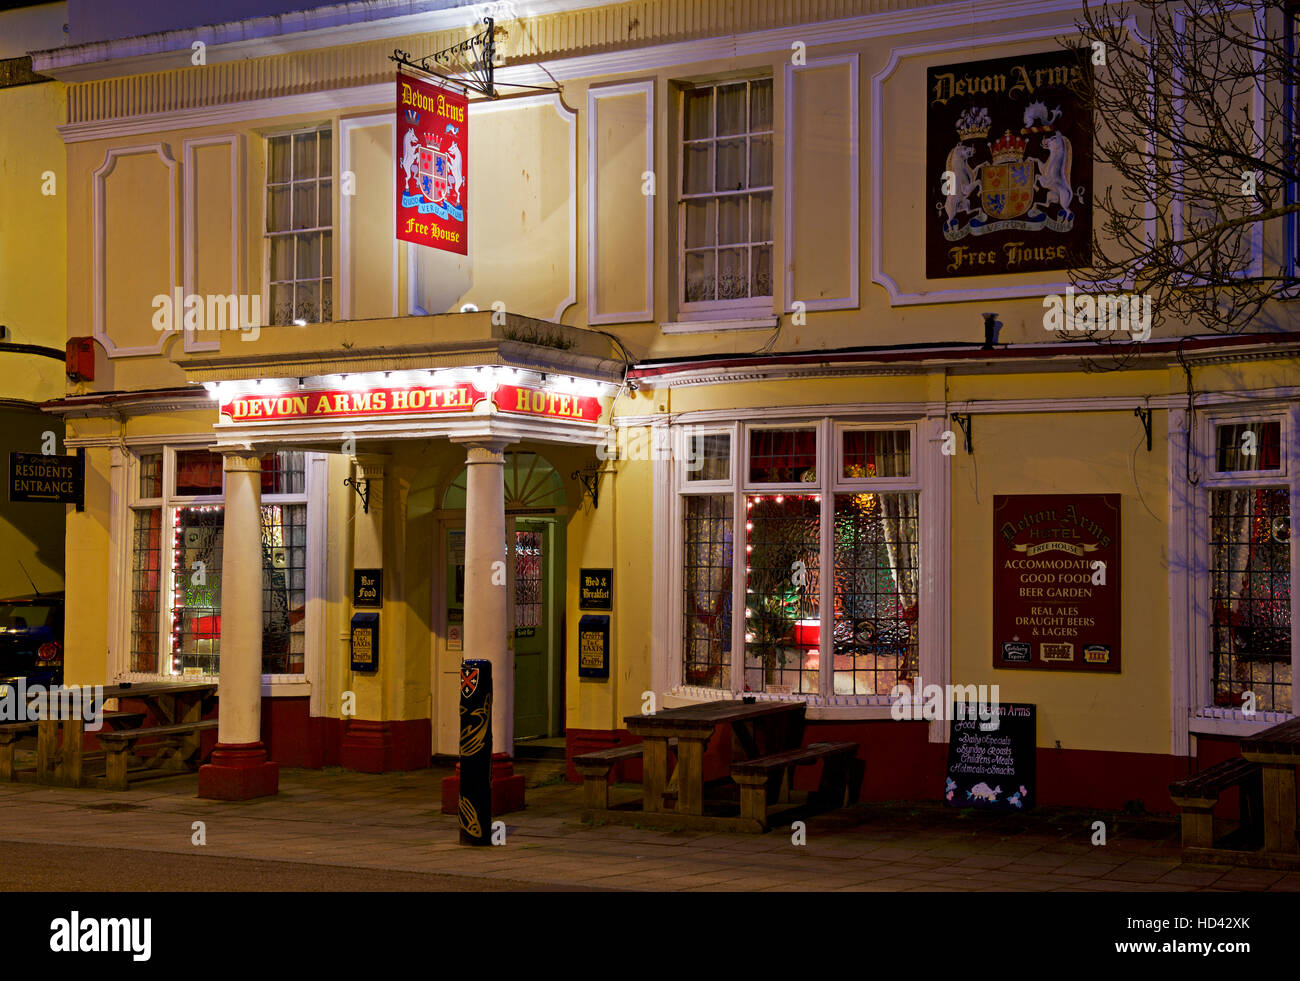 The Devon Arms Hotel at night, Teignmouth, Devon, England UK Stock Photo